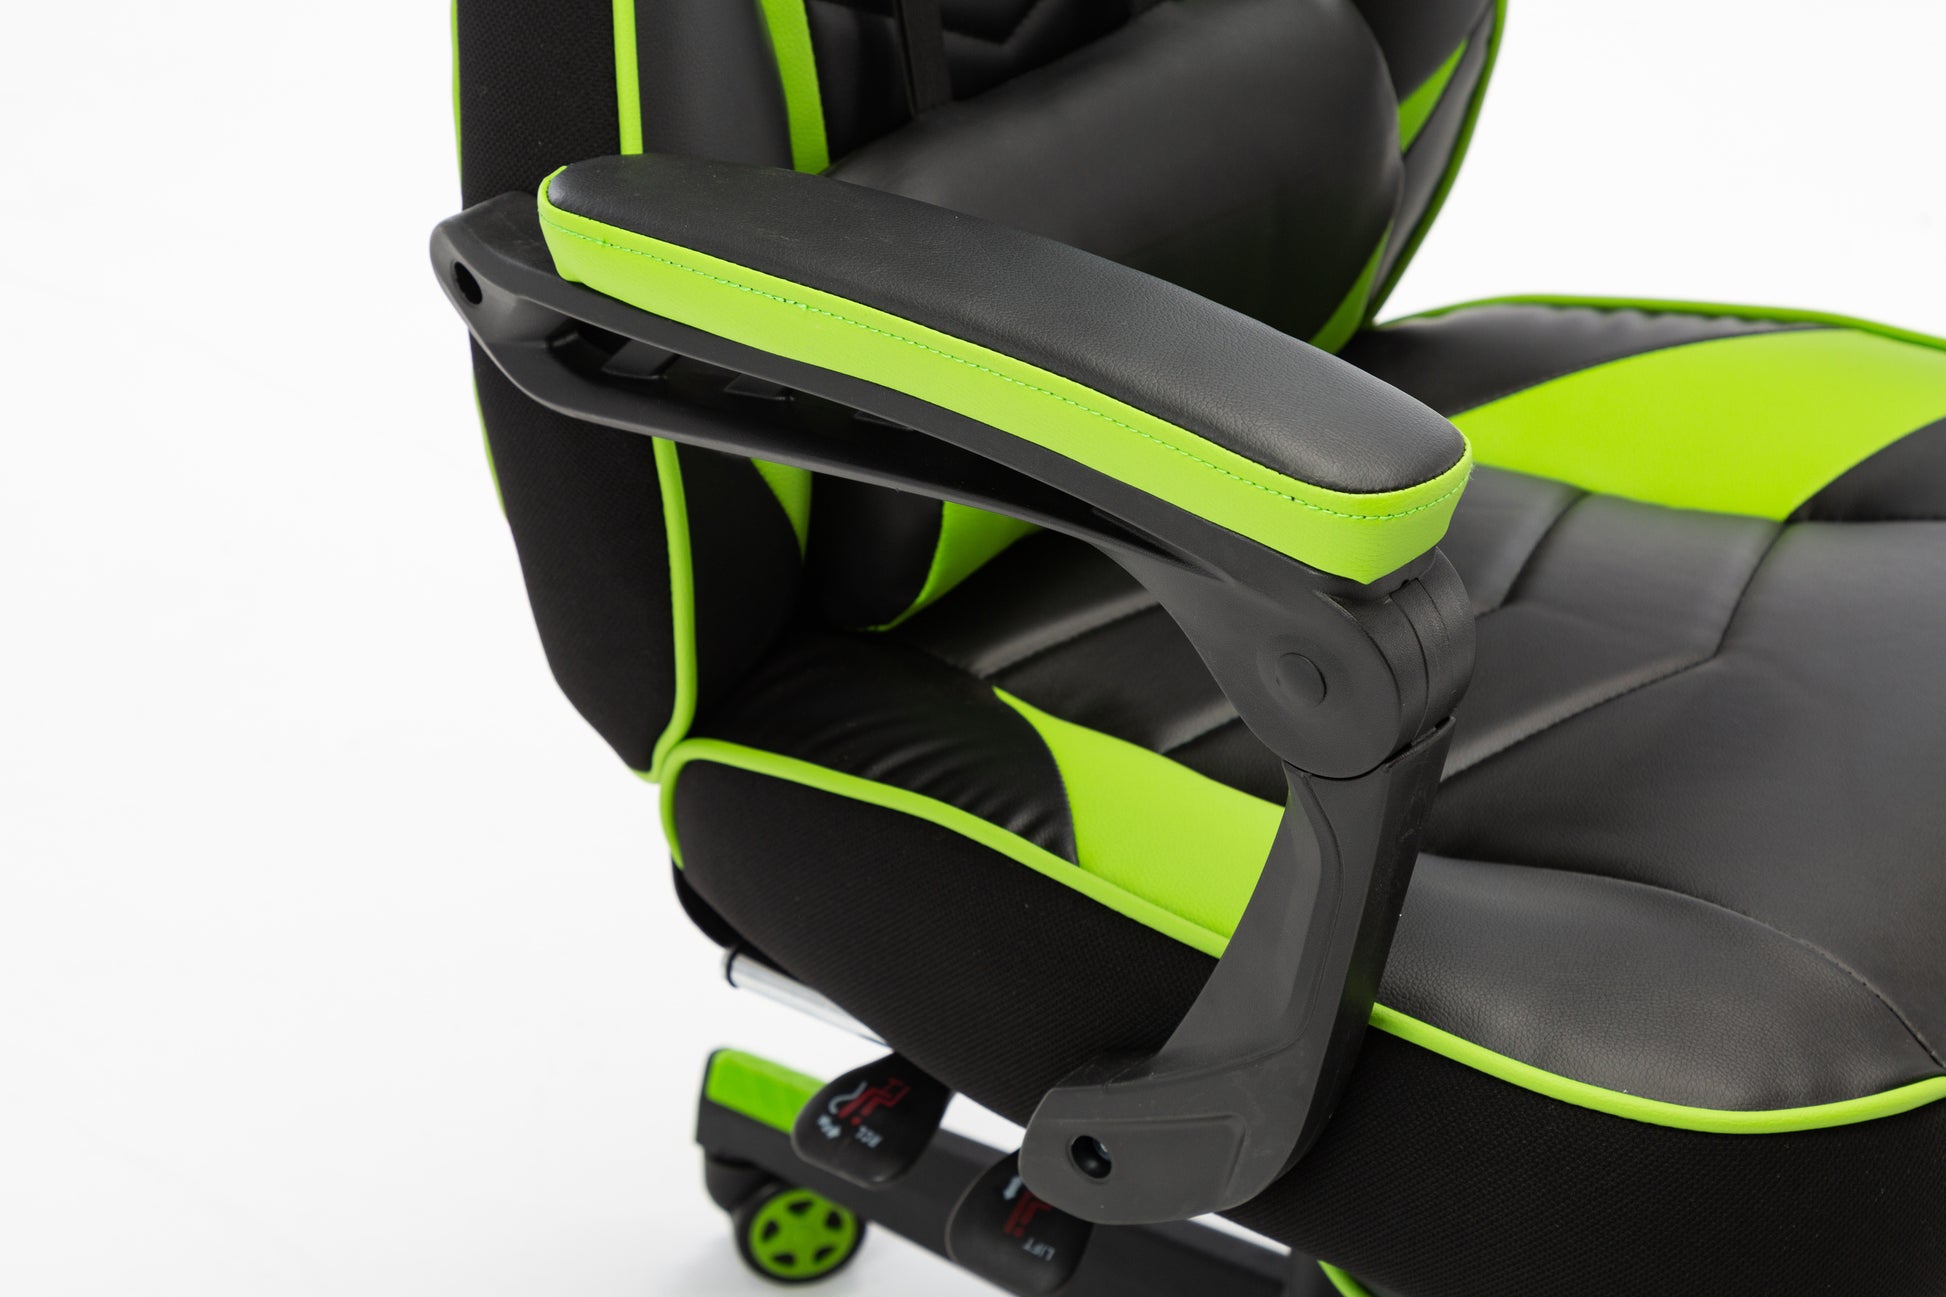 Ergonomic Gaming Chair w/Footrest Bright Green